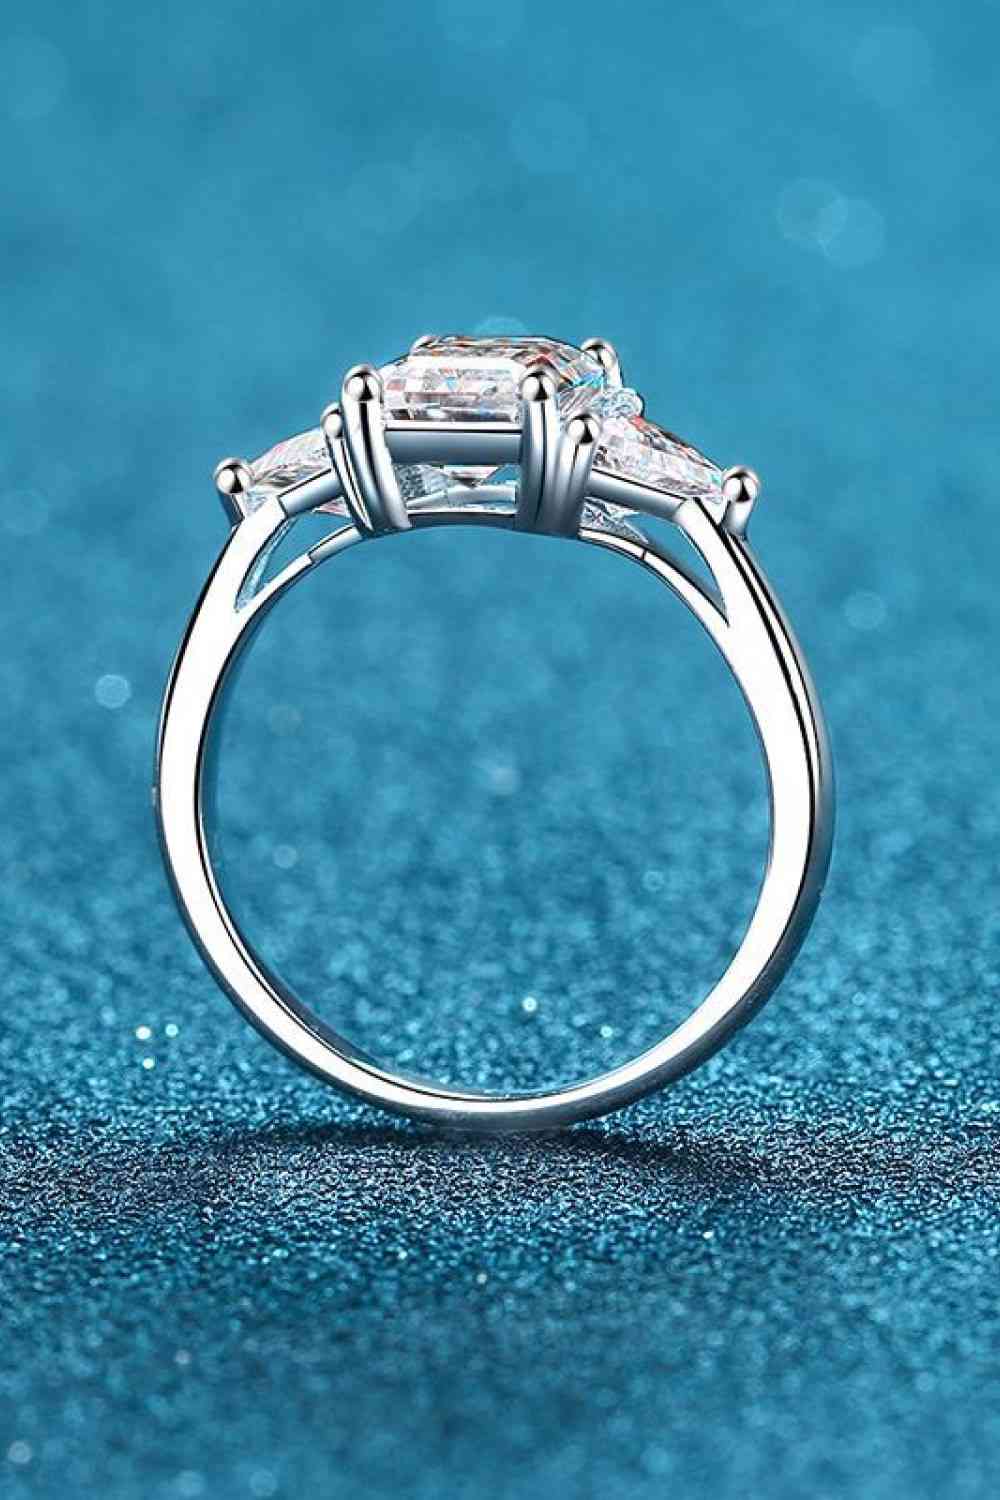 a three stone diamond ring on a blue background